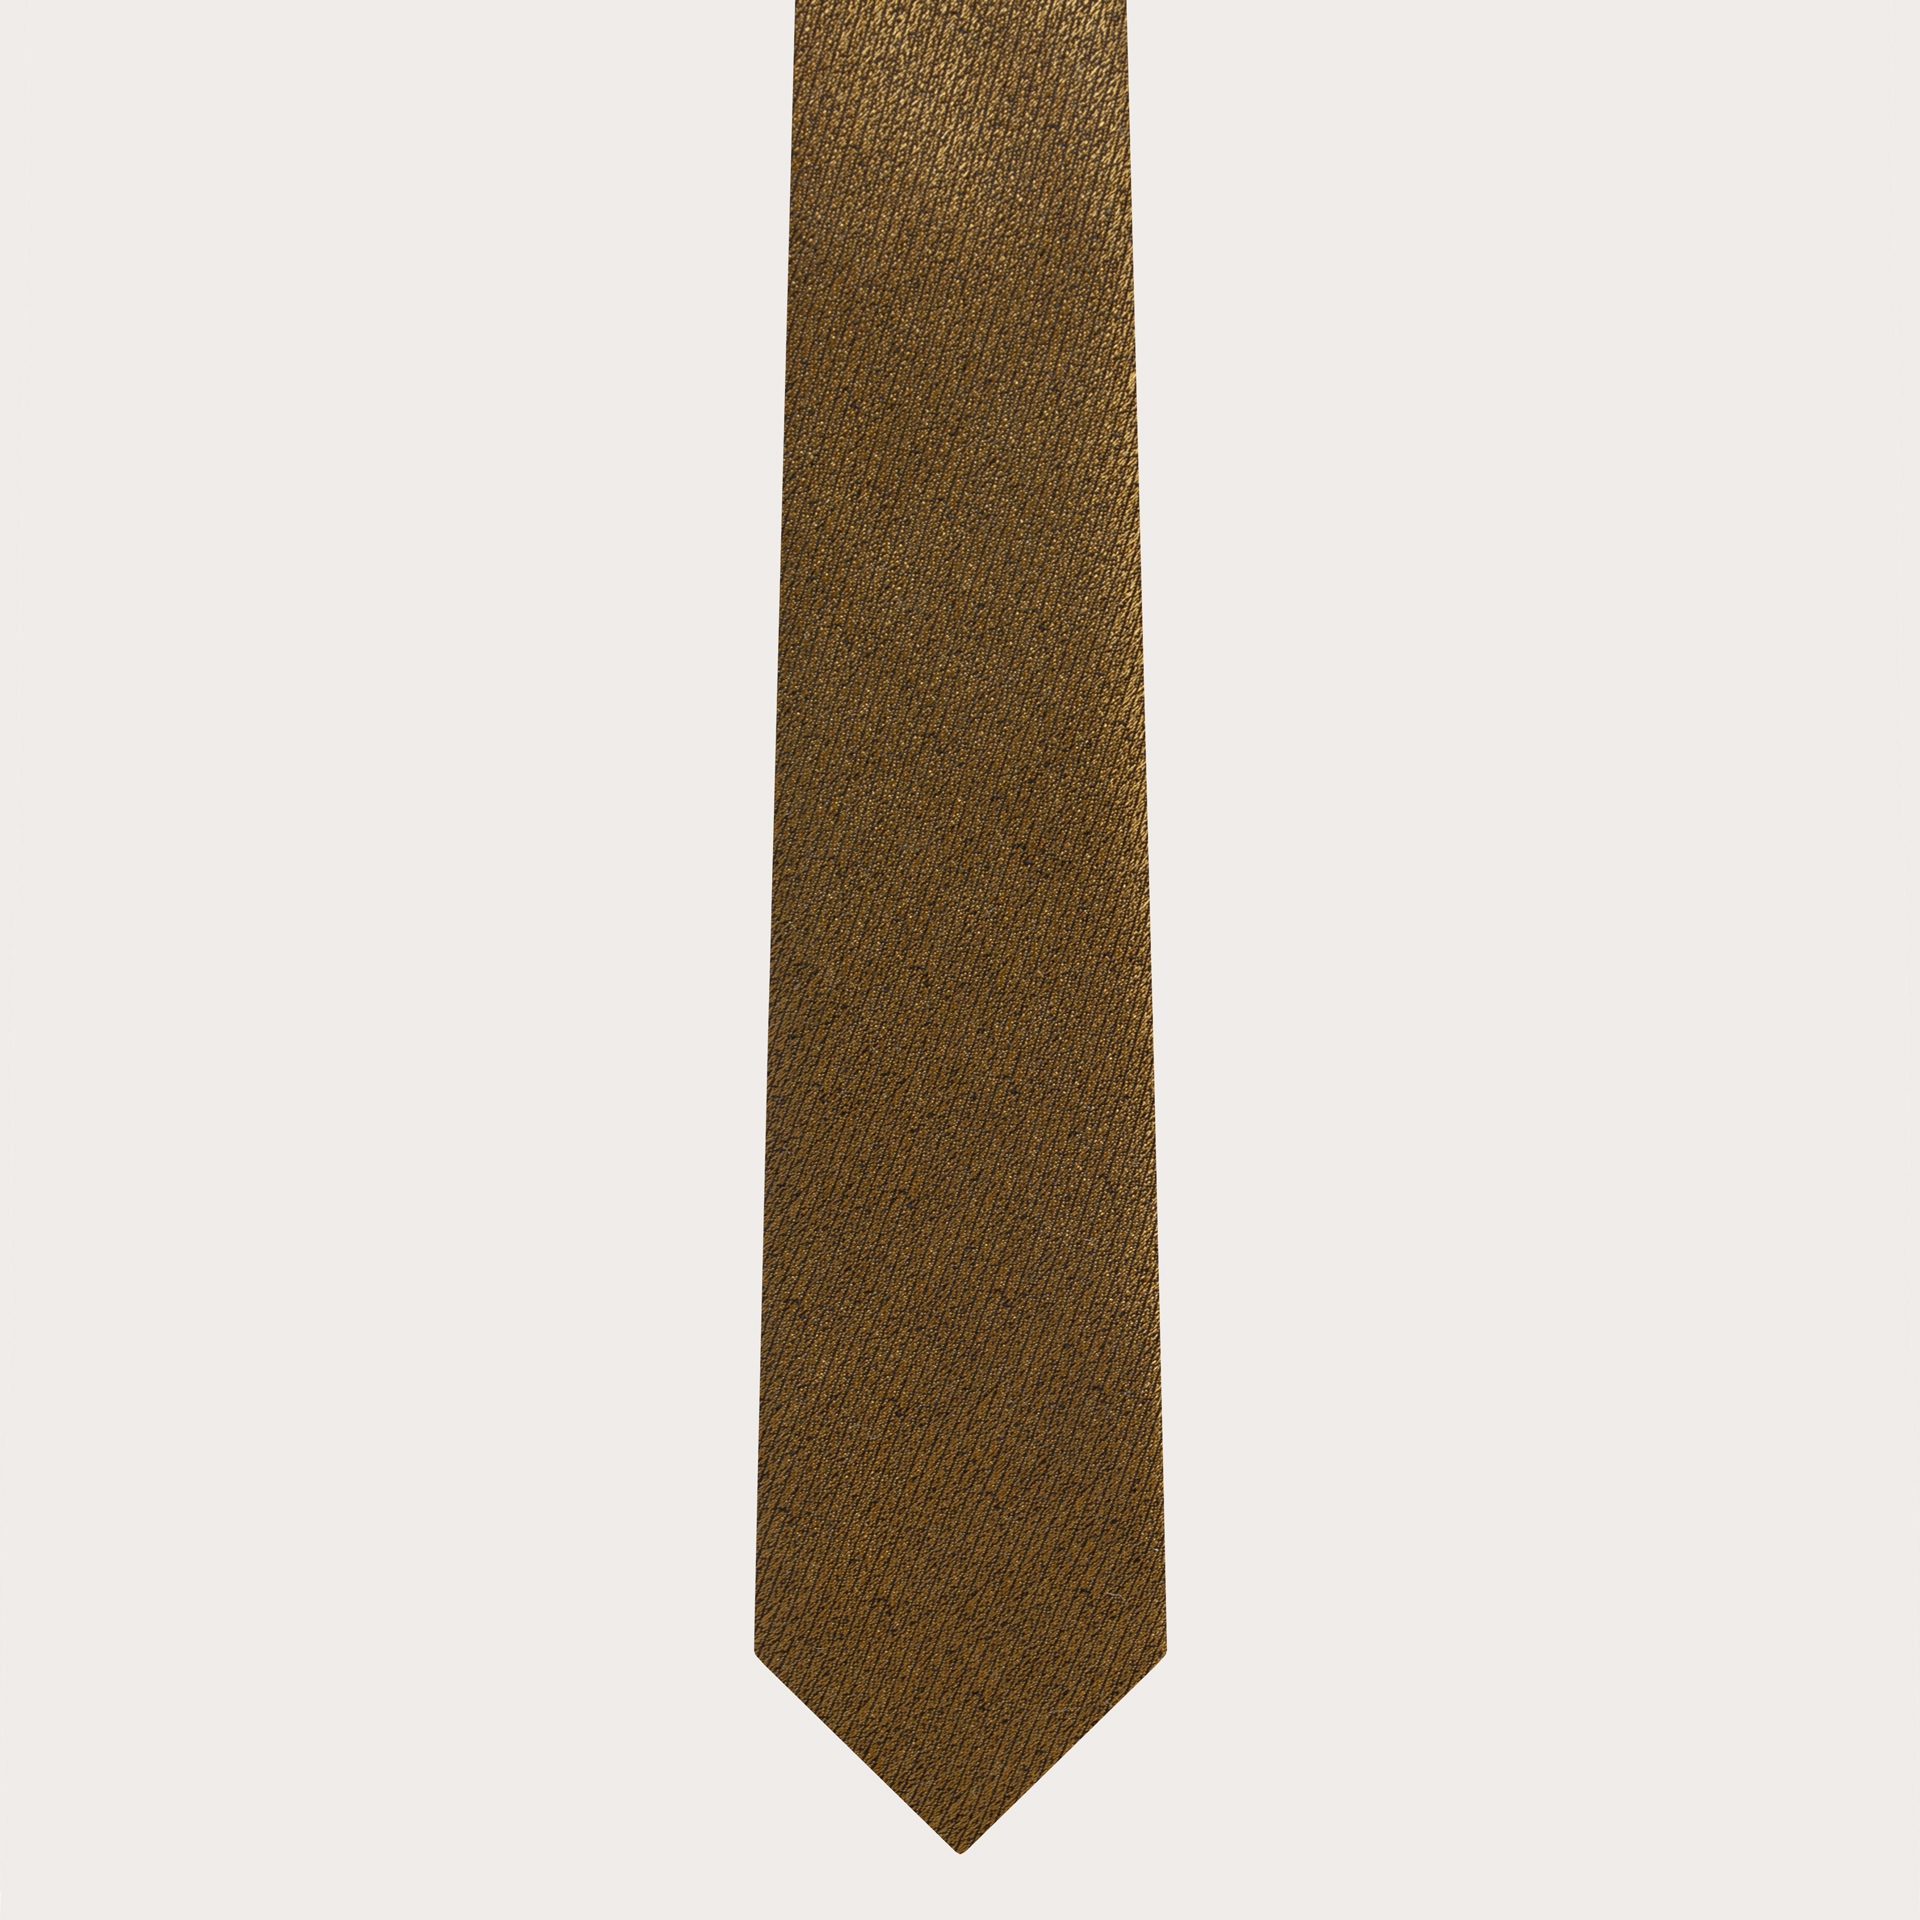 BRUCLE Elegante cravatta sottile in seta jacquard oro cangiante